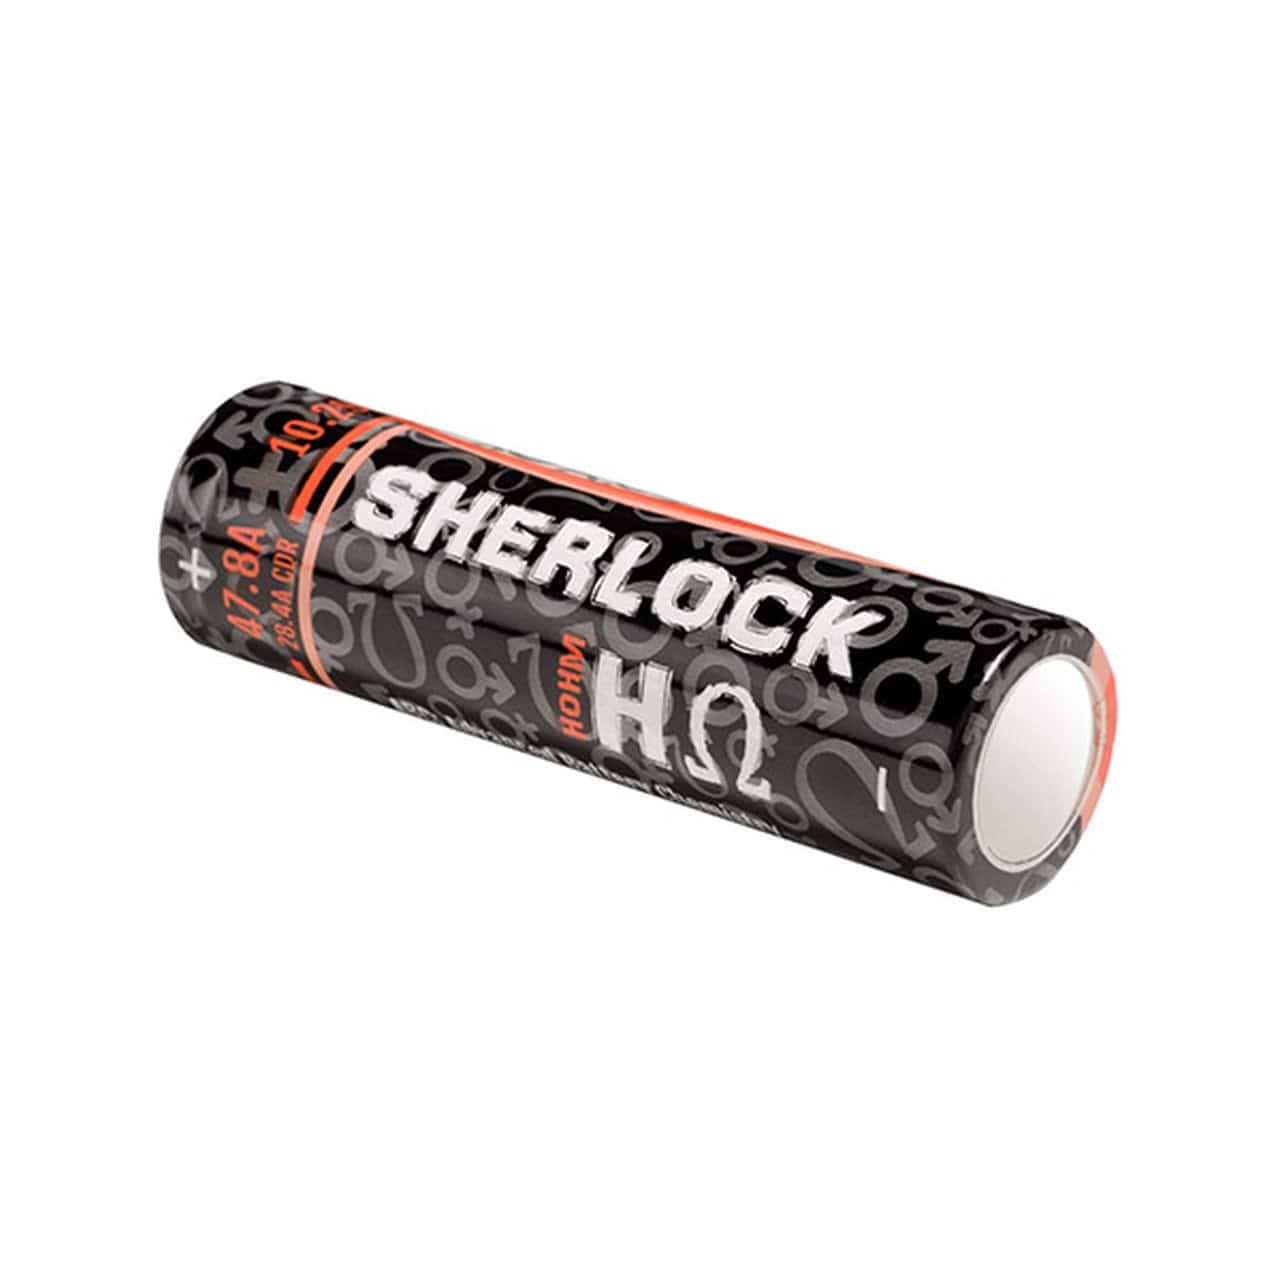 Sherlock Hohm 20700 2782mAh 47.8A Battery